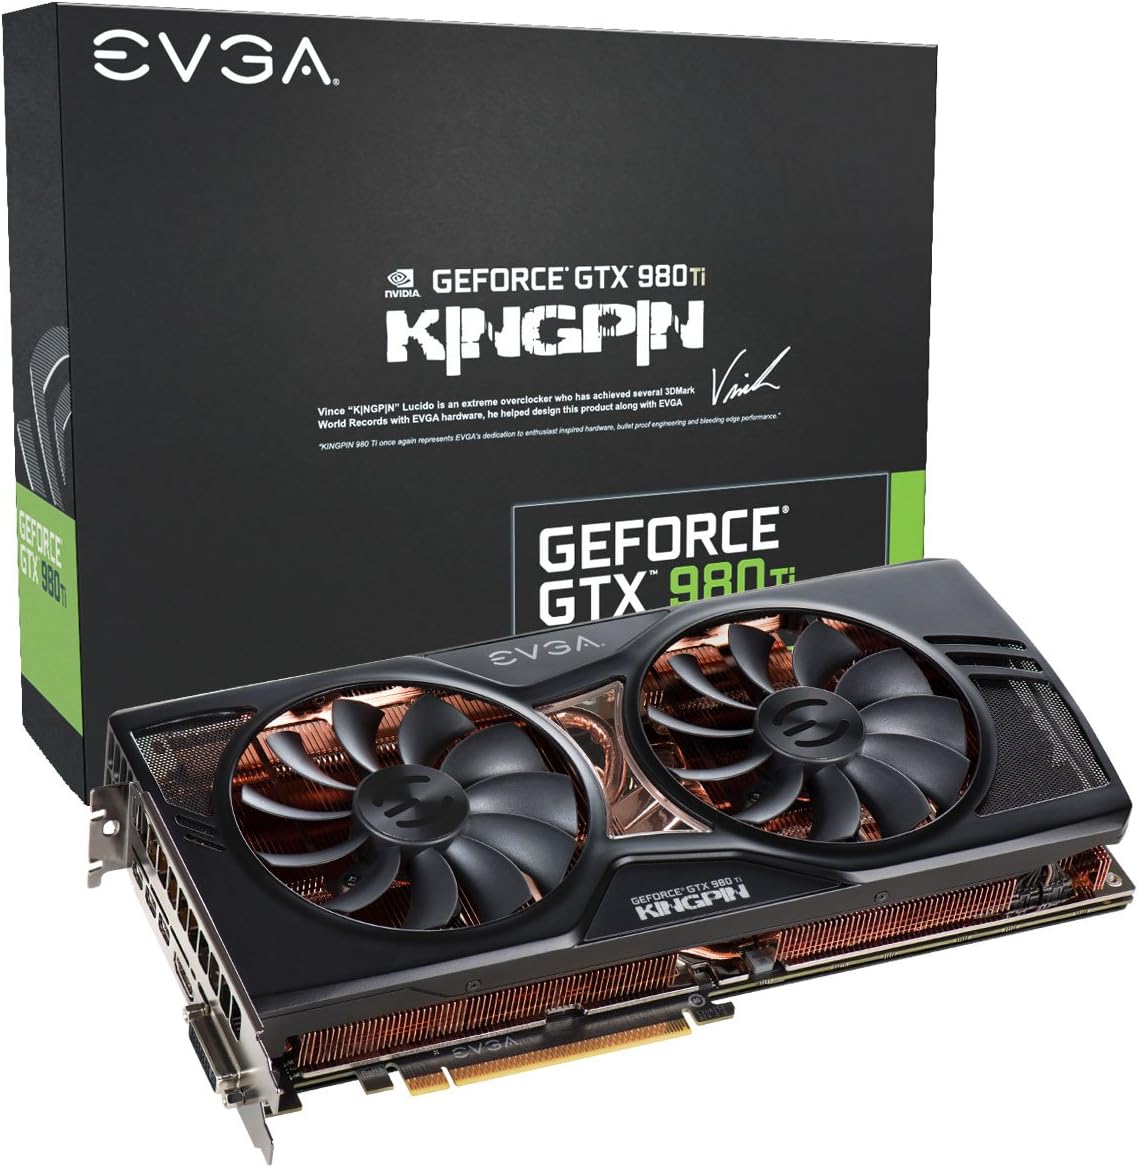 EVGA GeForce GTX 980 Ti 6GB K|NGP|N w/ACX 2.0+ (72%+ [...]